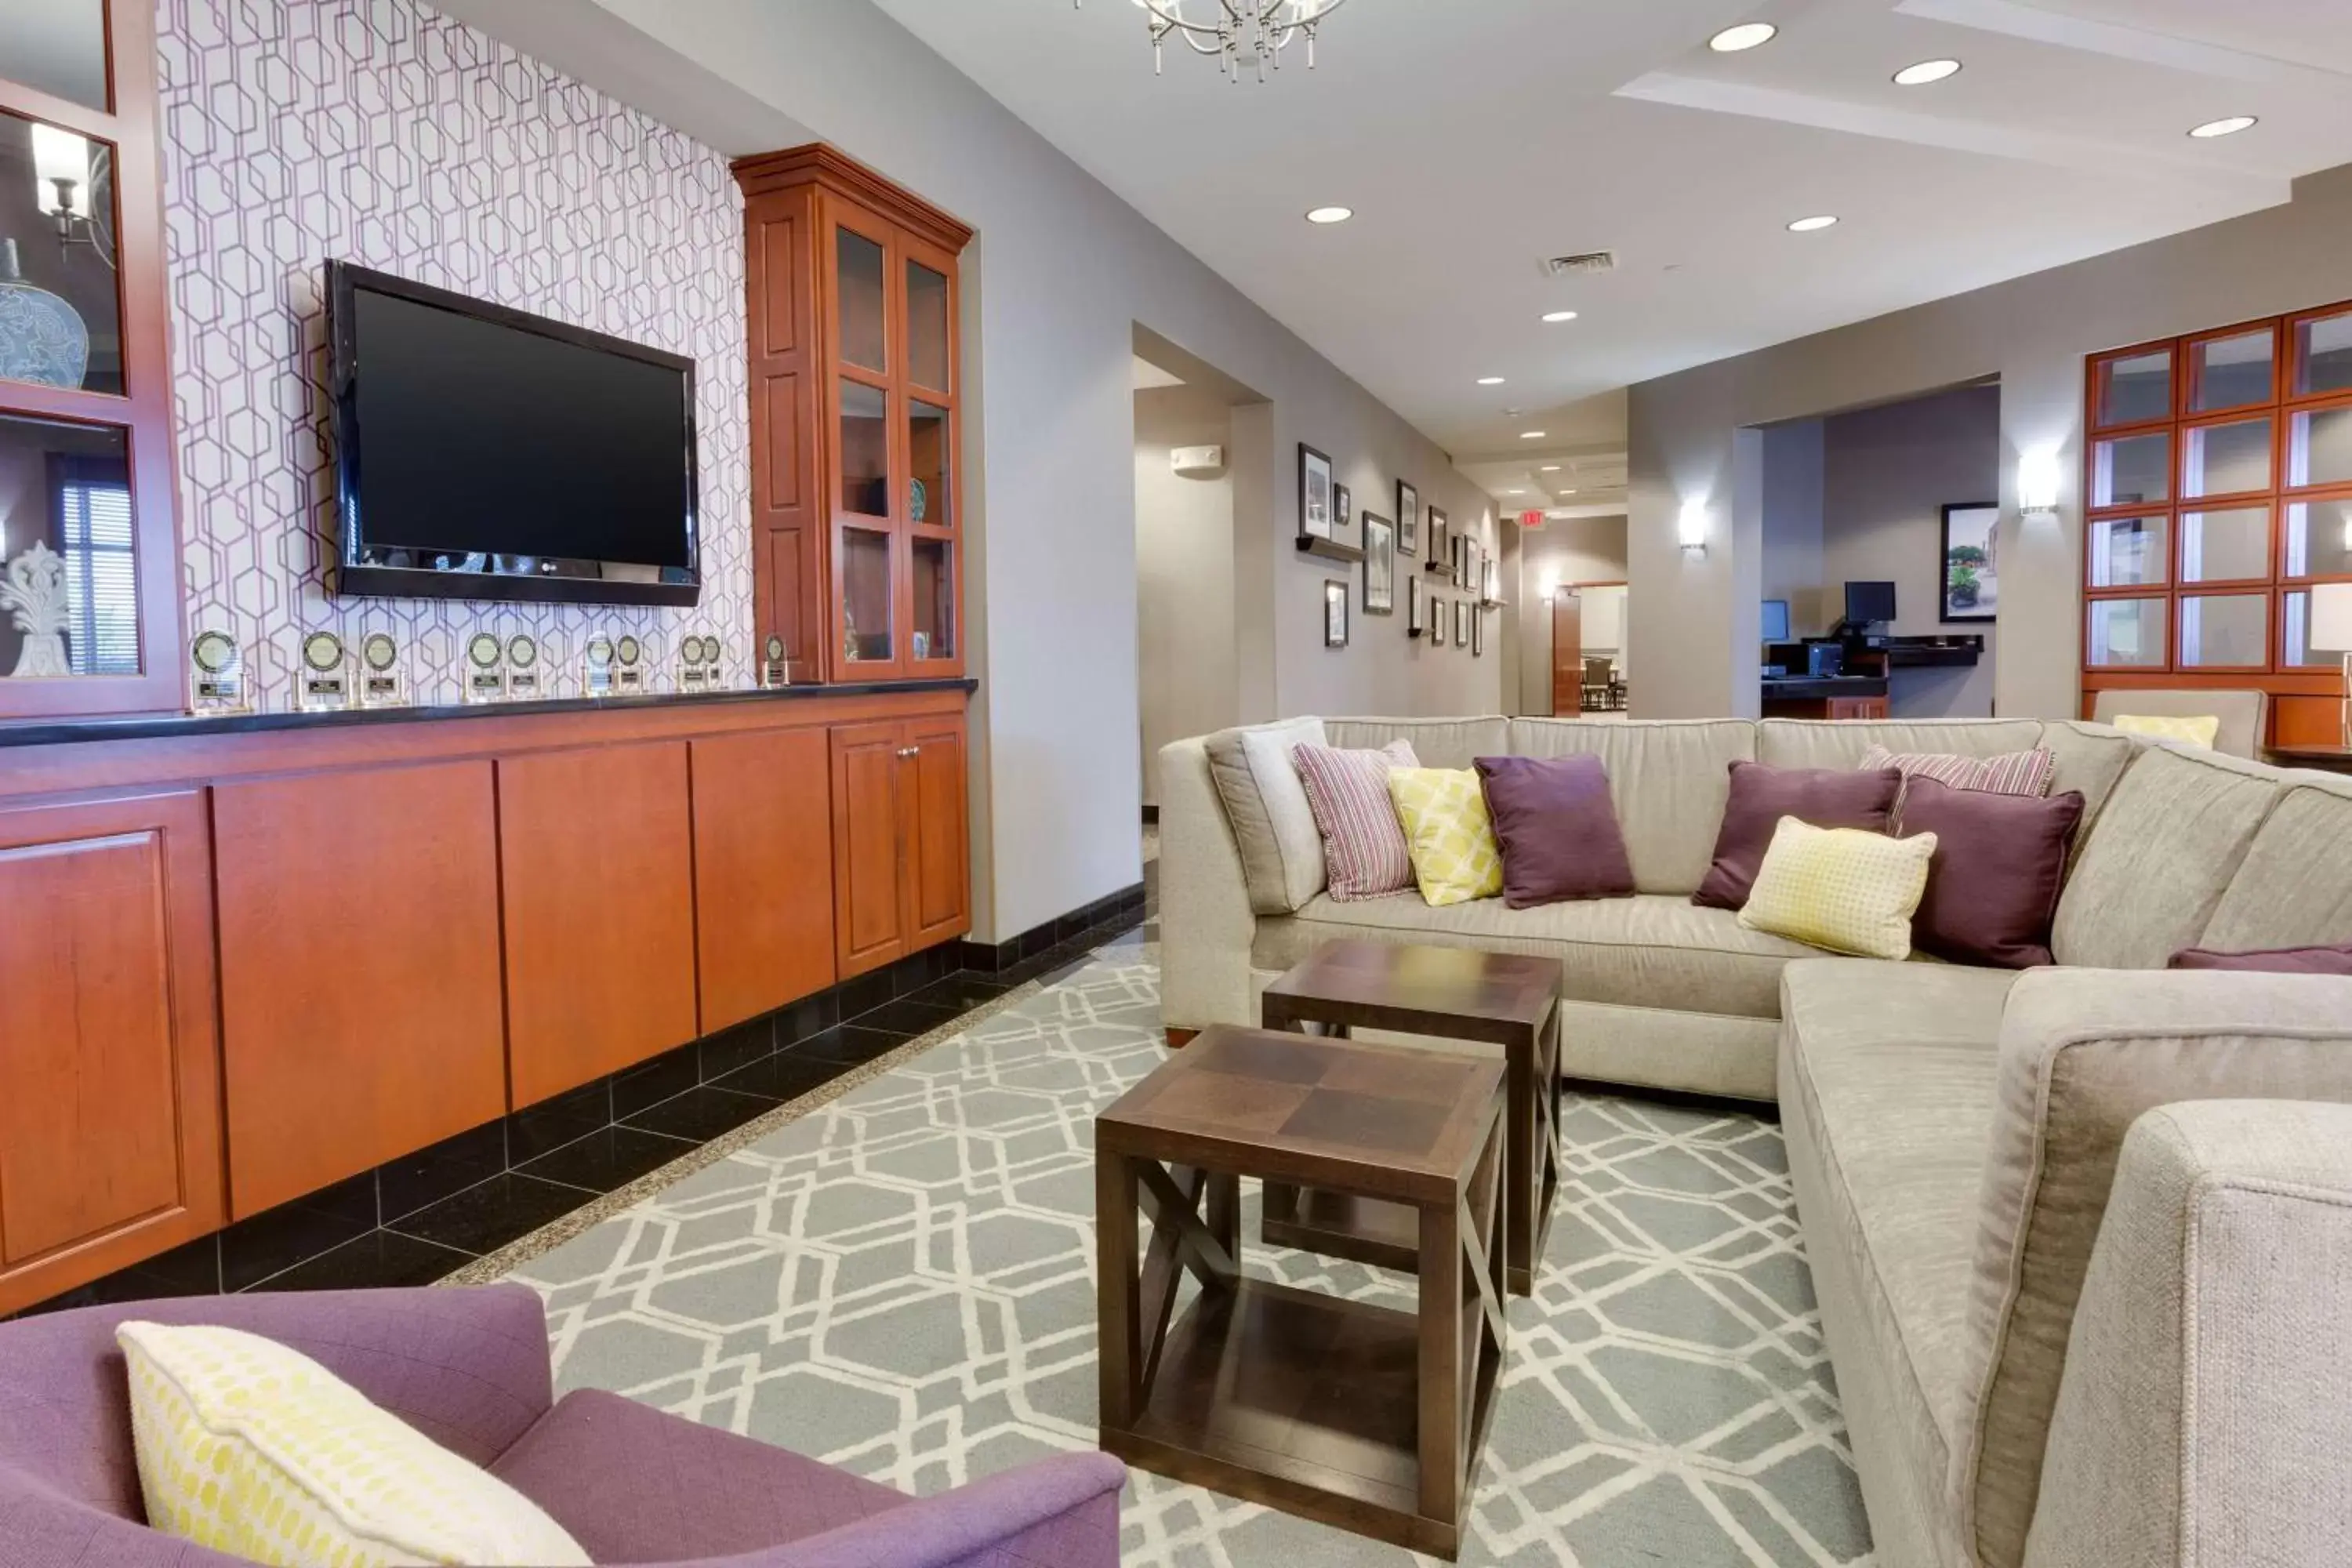 Lobby or reception in Drury Inn & Suites Middletown Franklin